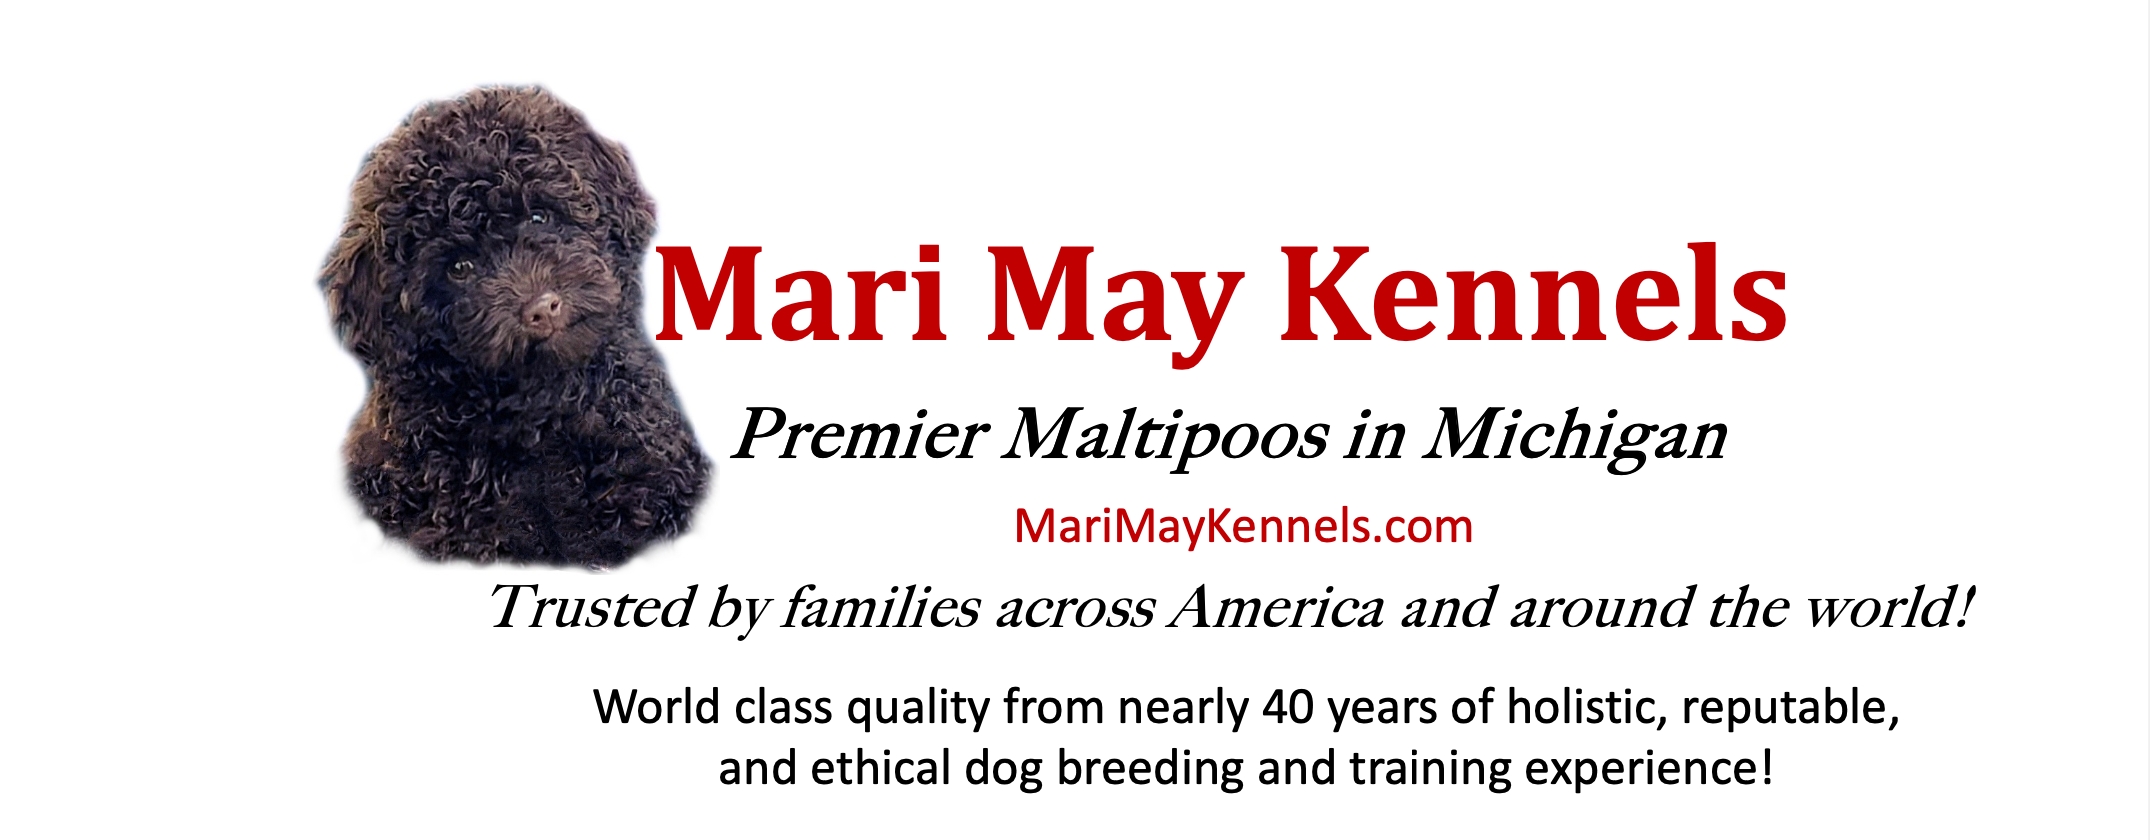 Mari May Kennels, Michigan, Maltipoos